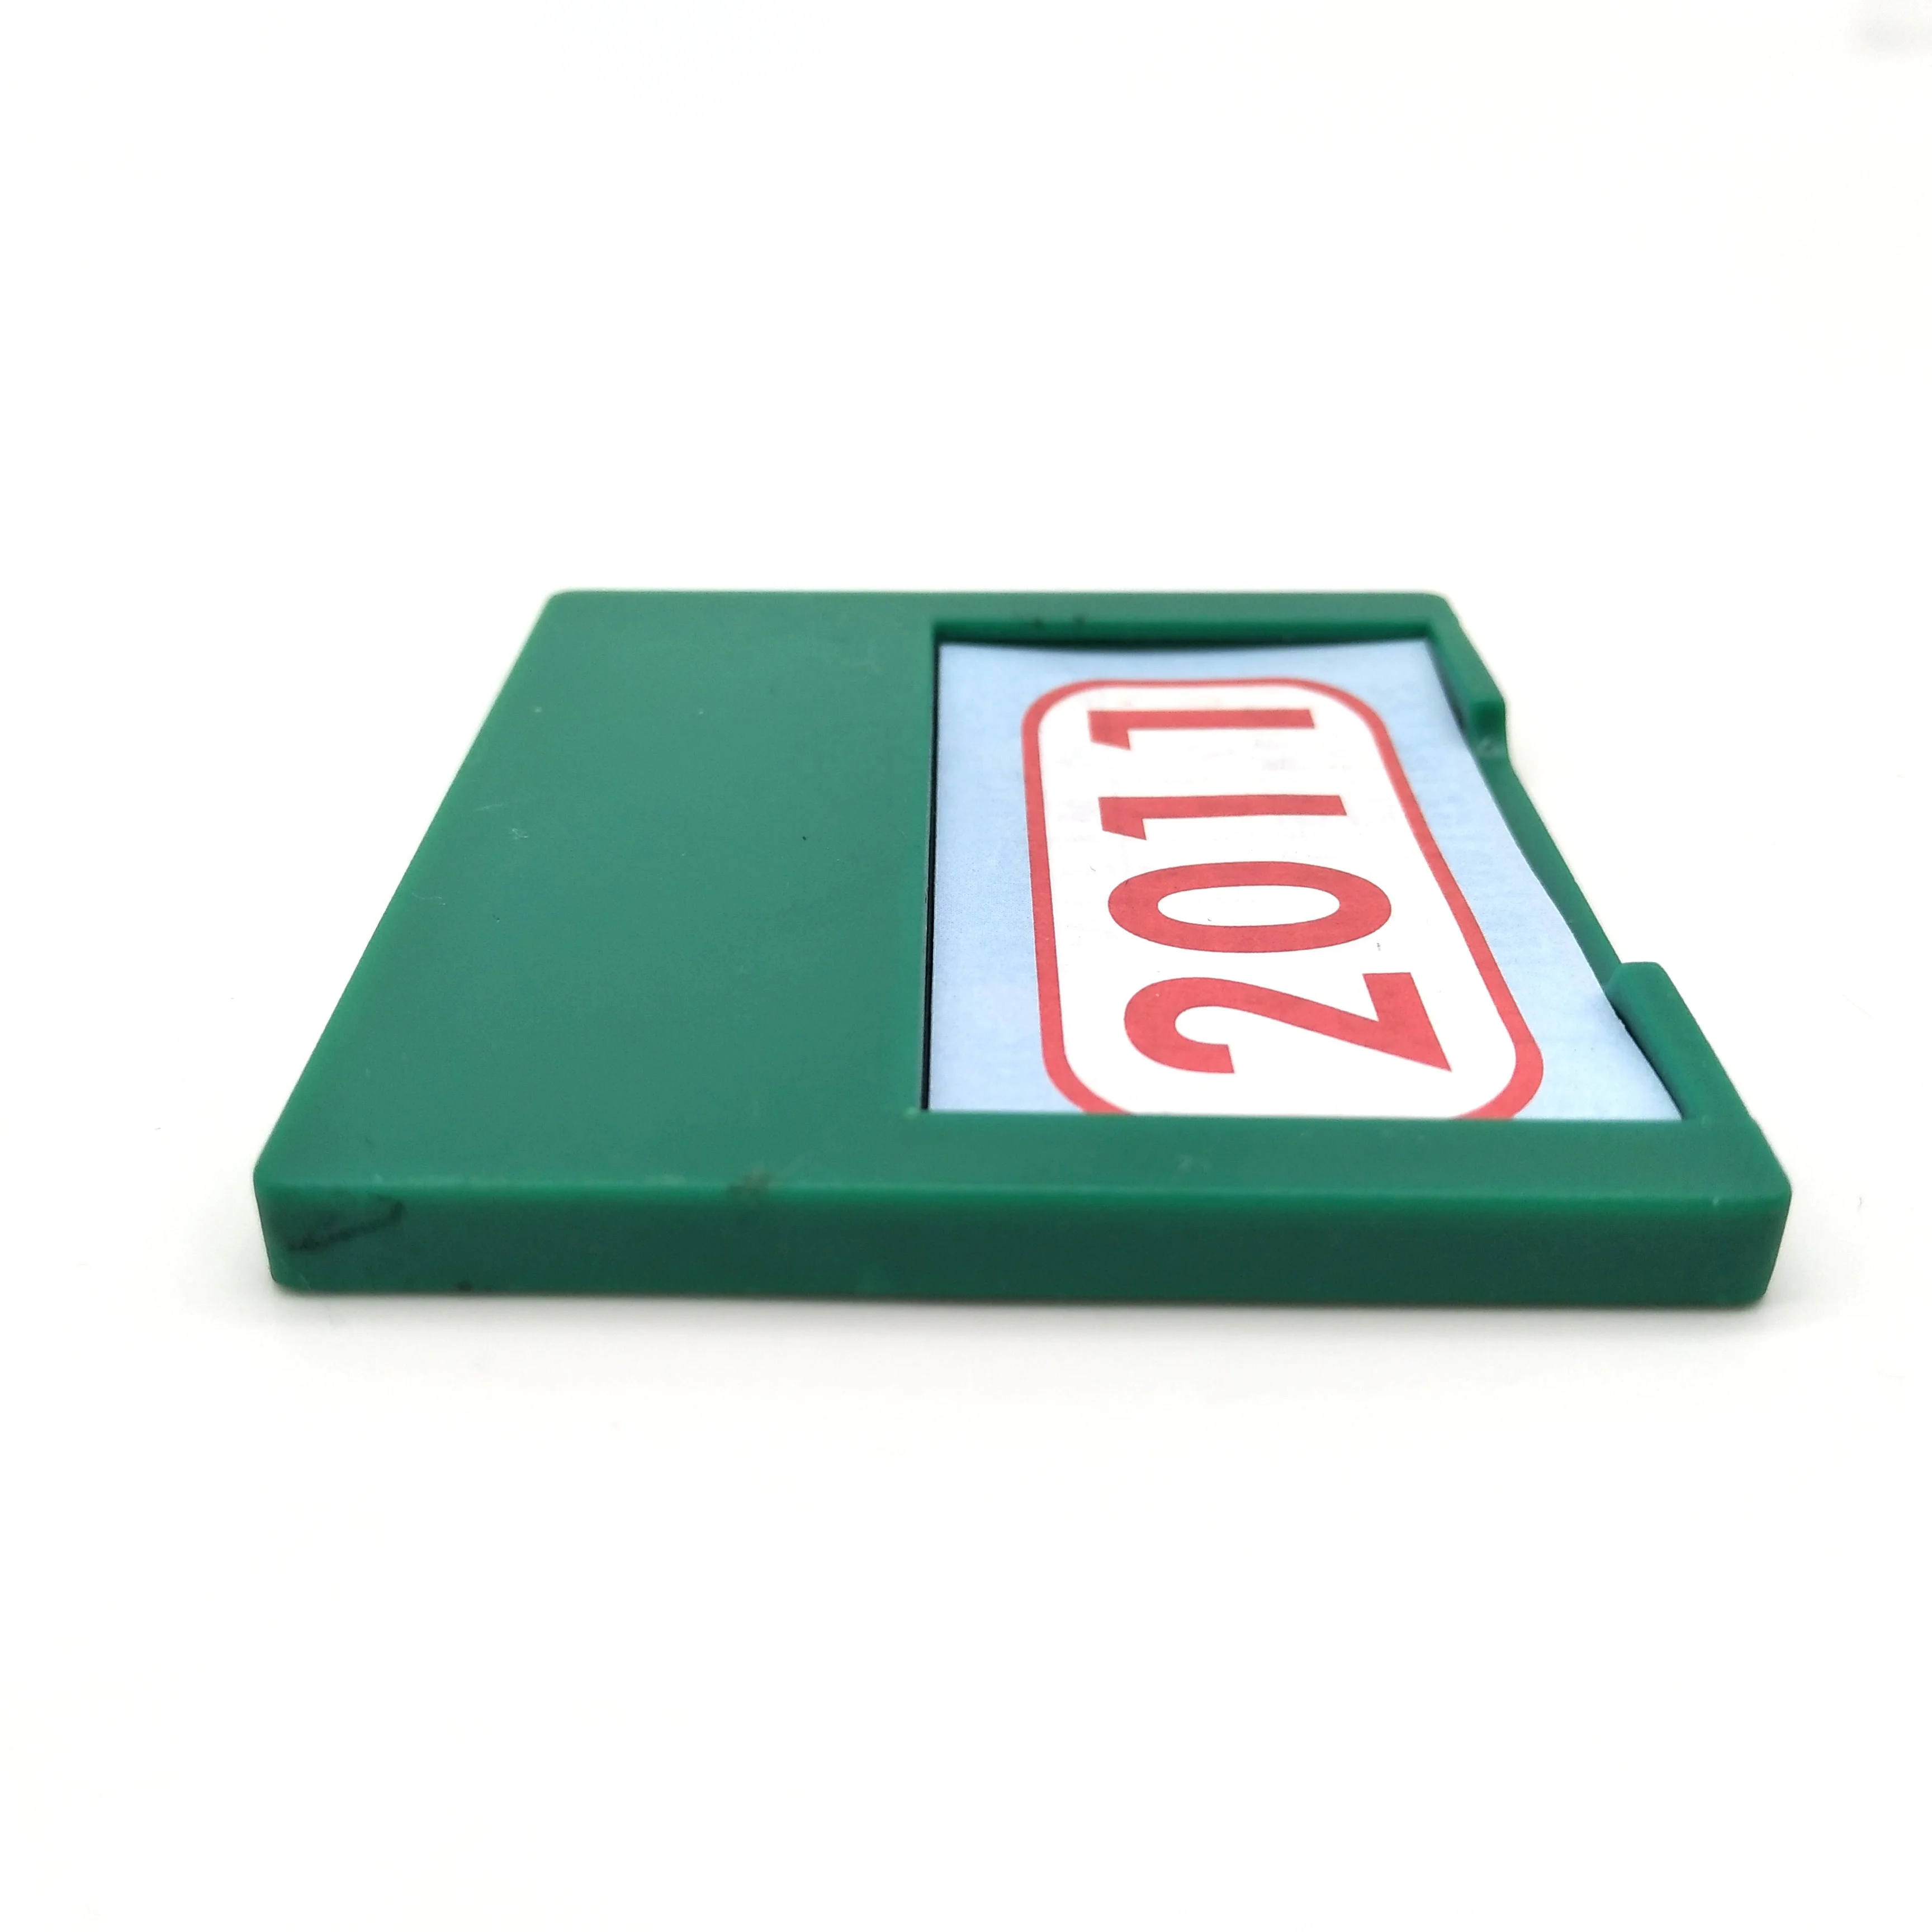 OEM cuestom-made colorful cheap custom design kids plastic card for learning